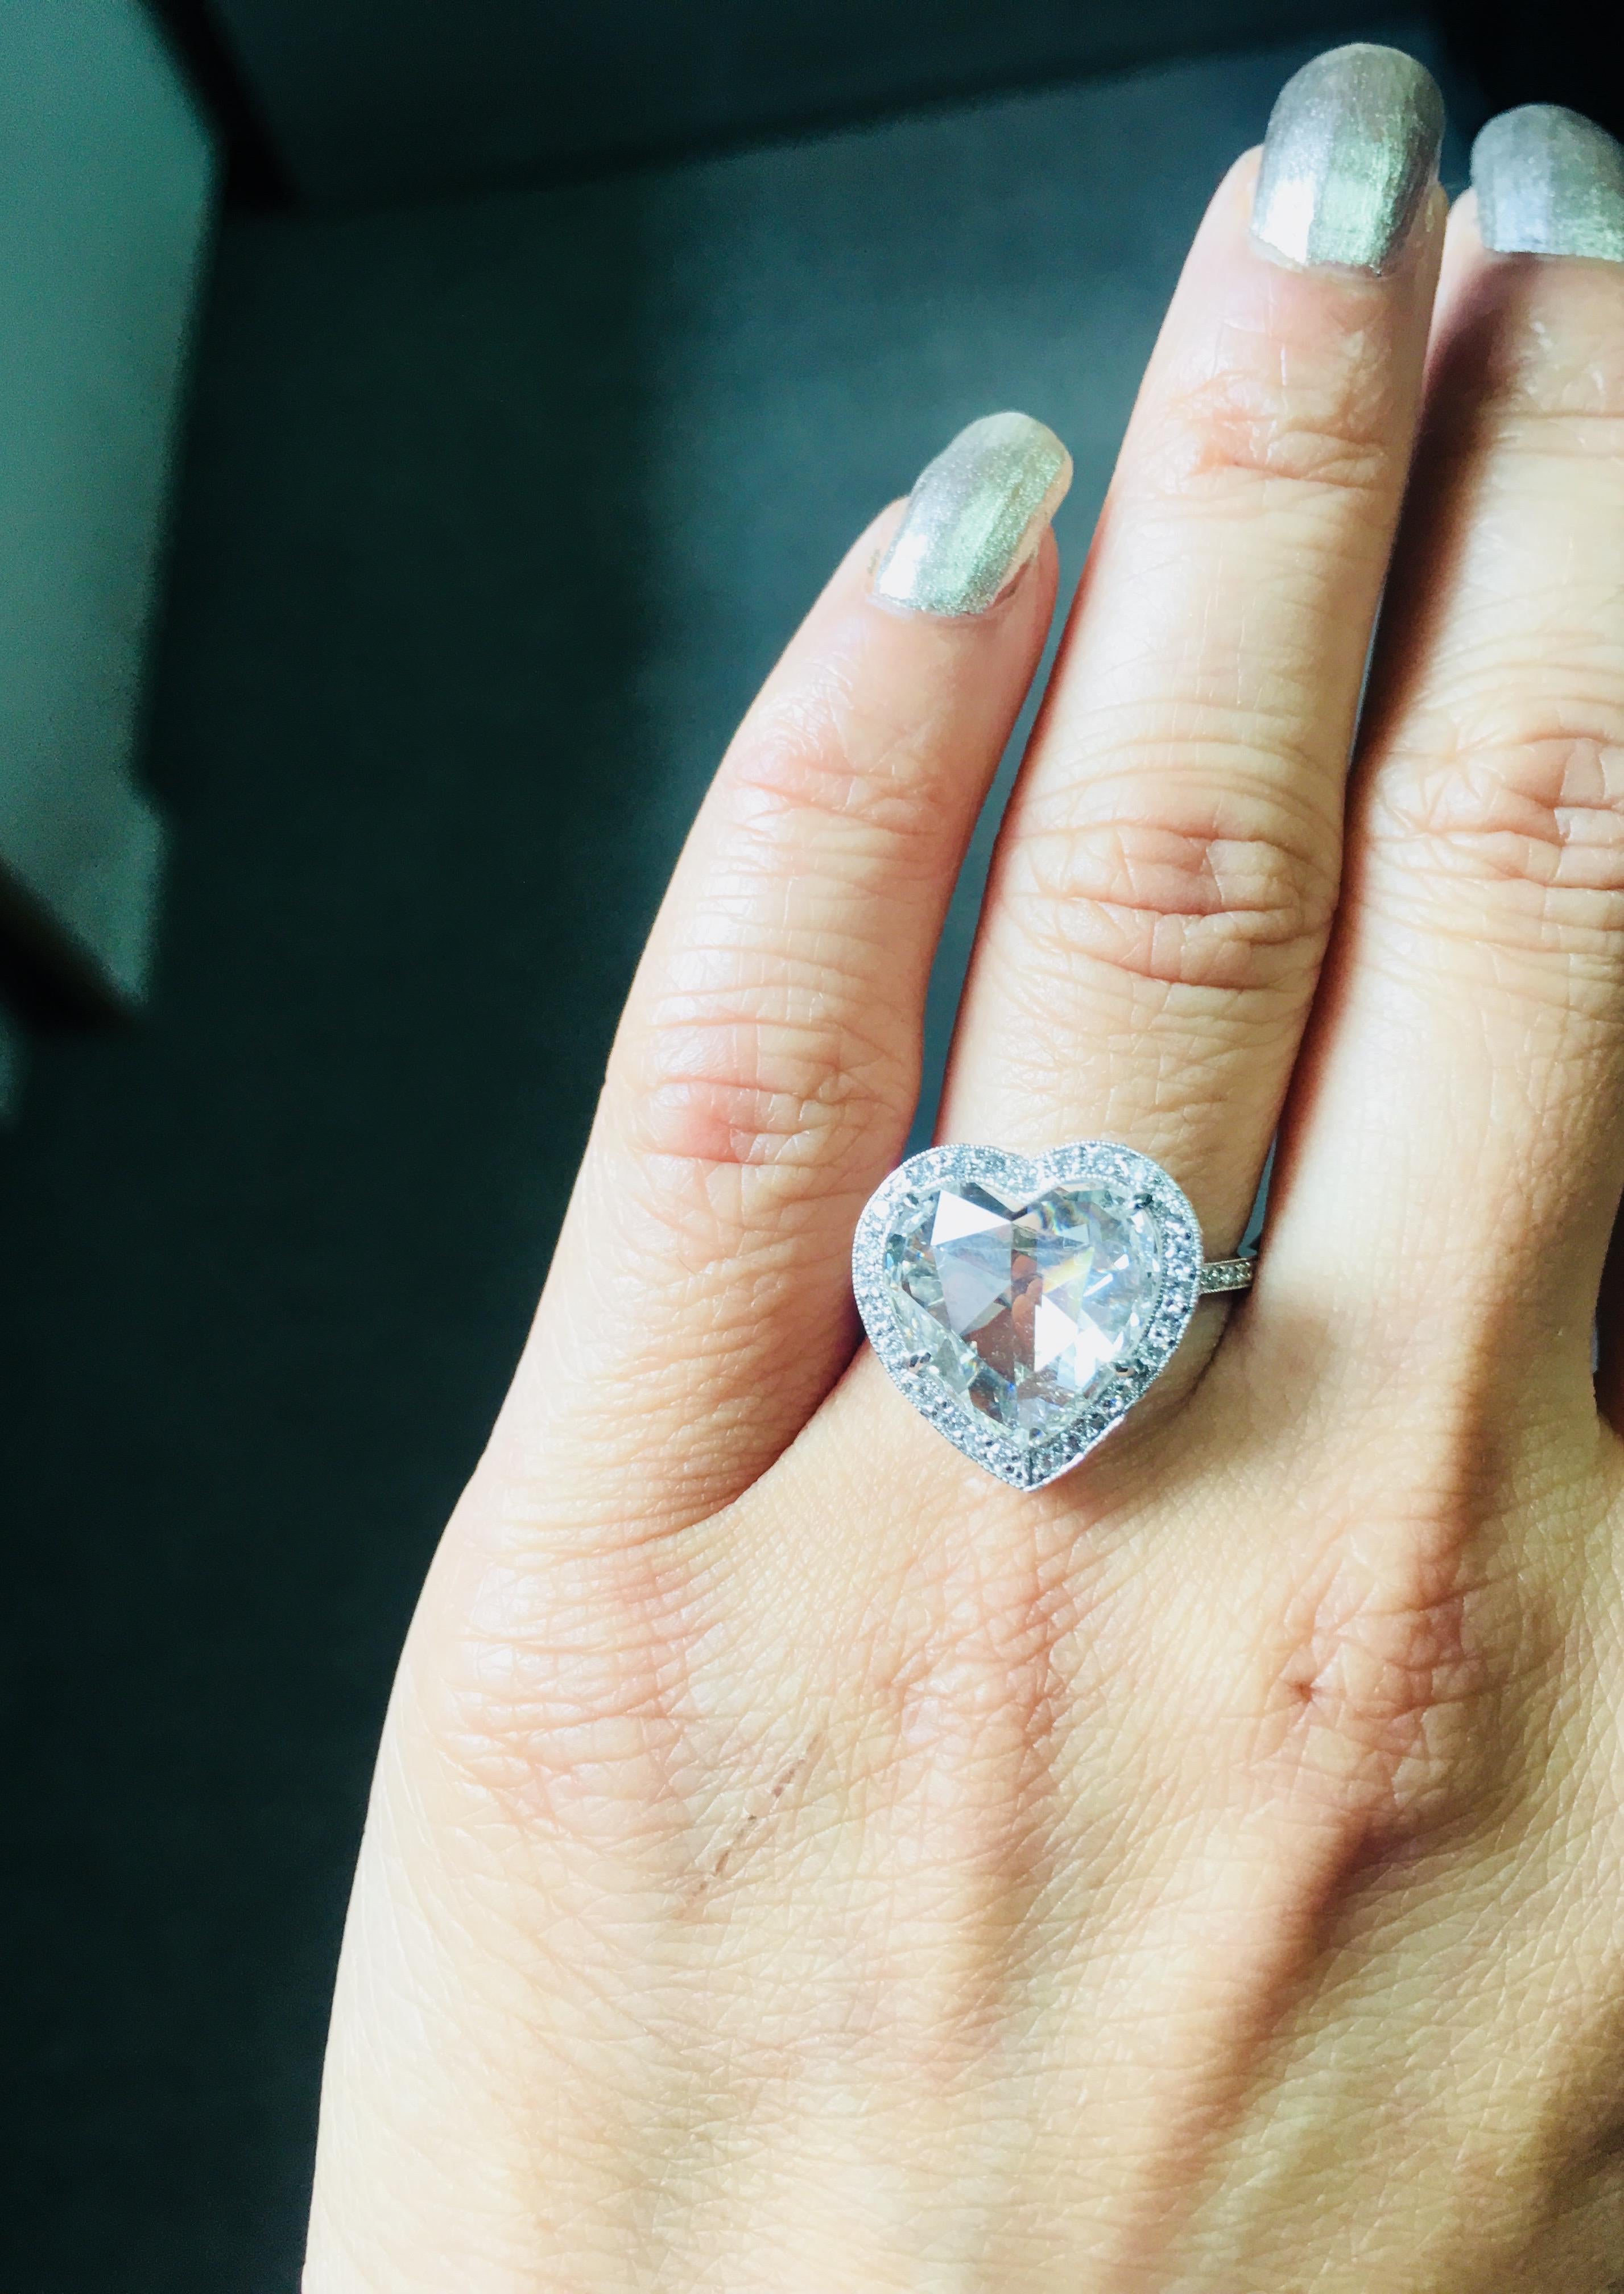 5 carat heart shaped diamond ring